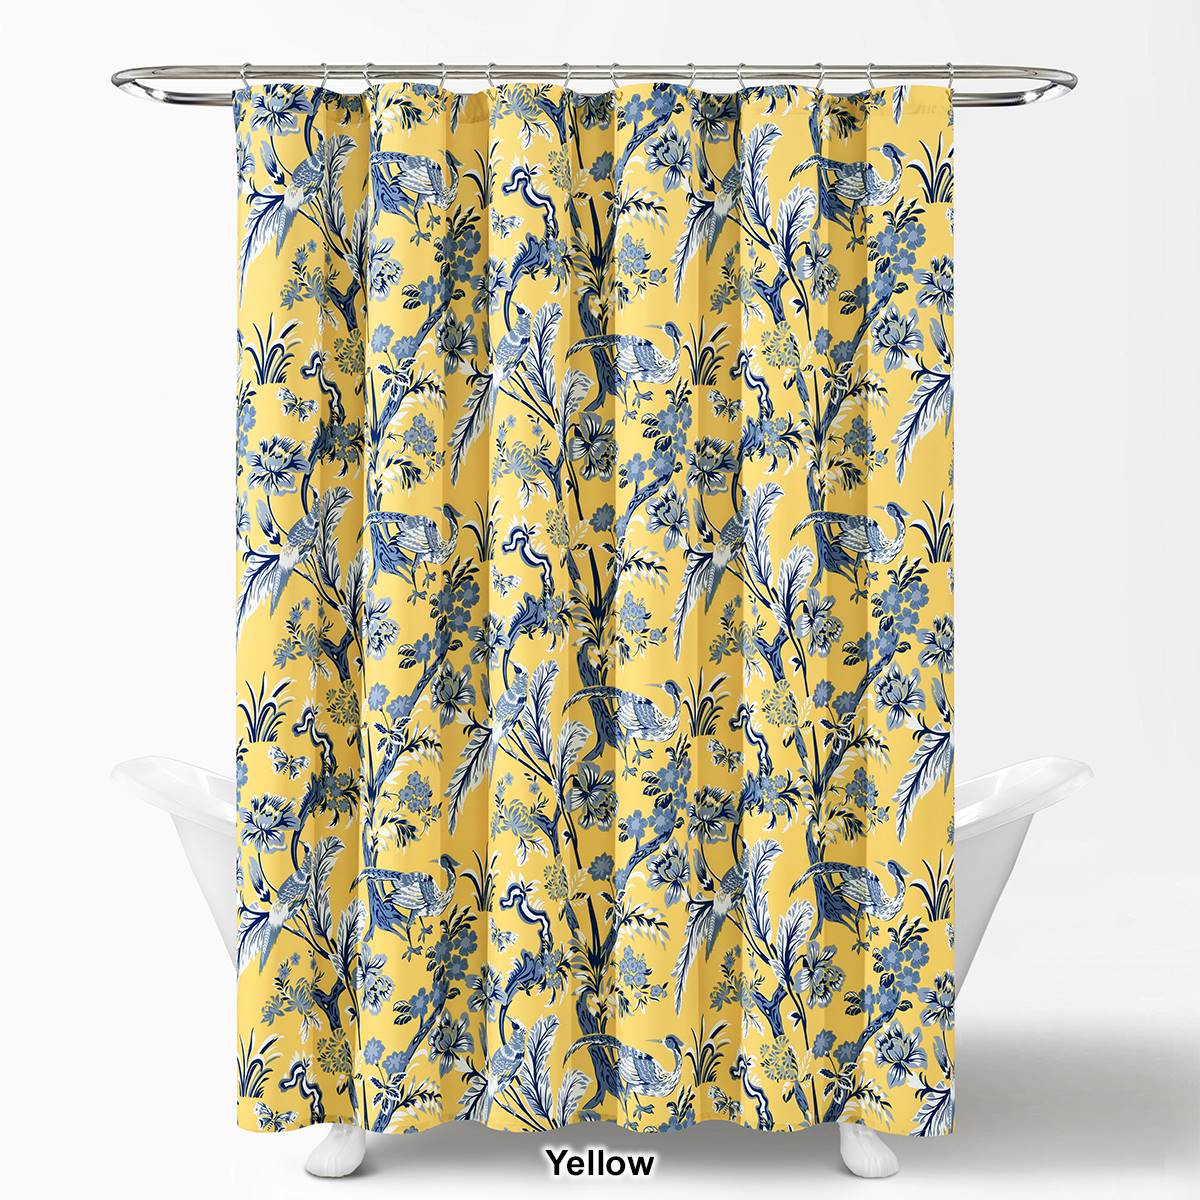 Lush Decor(R) Dolores Shower Curtain